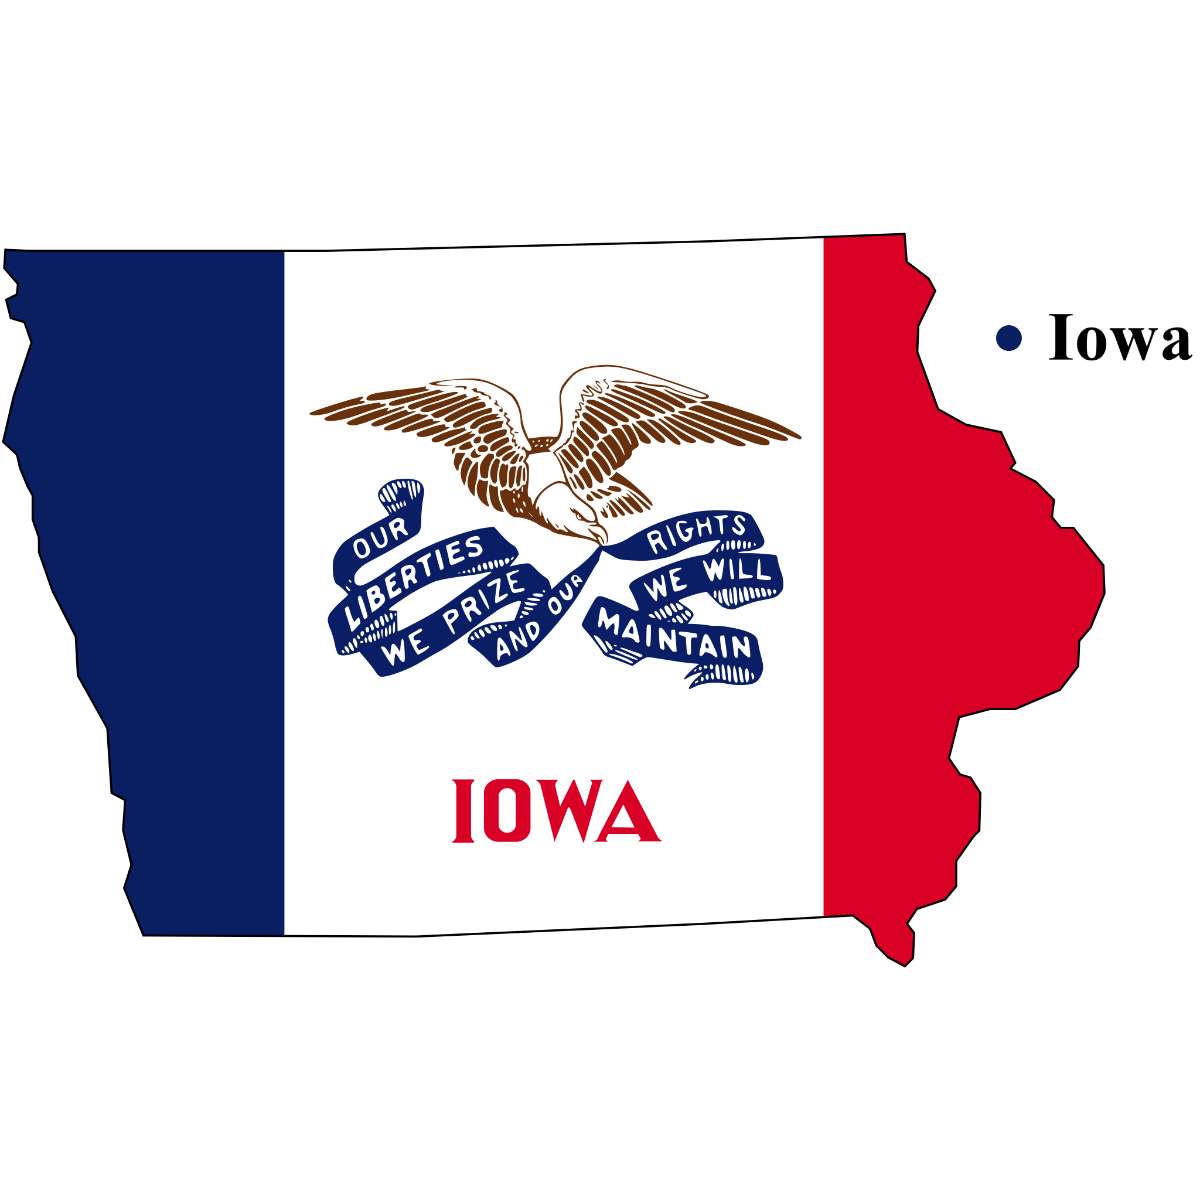 Iowa State map cutout with Iowa flag superimposed